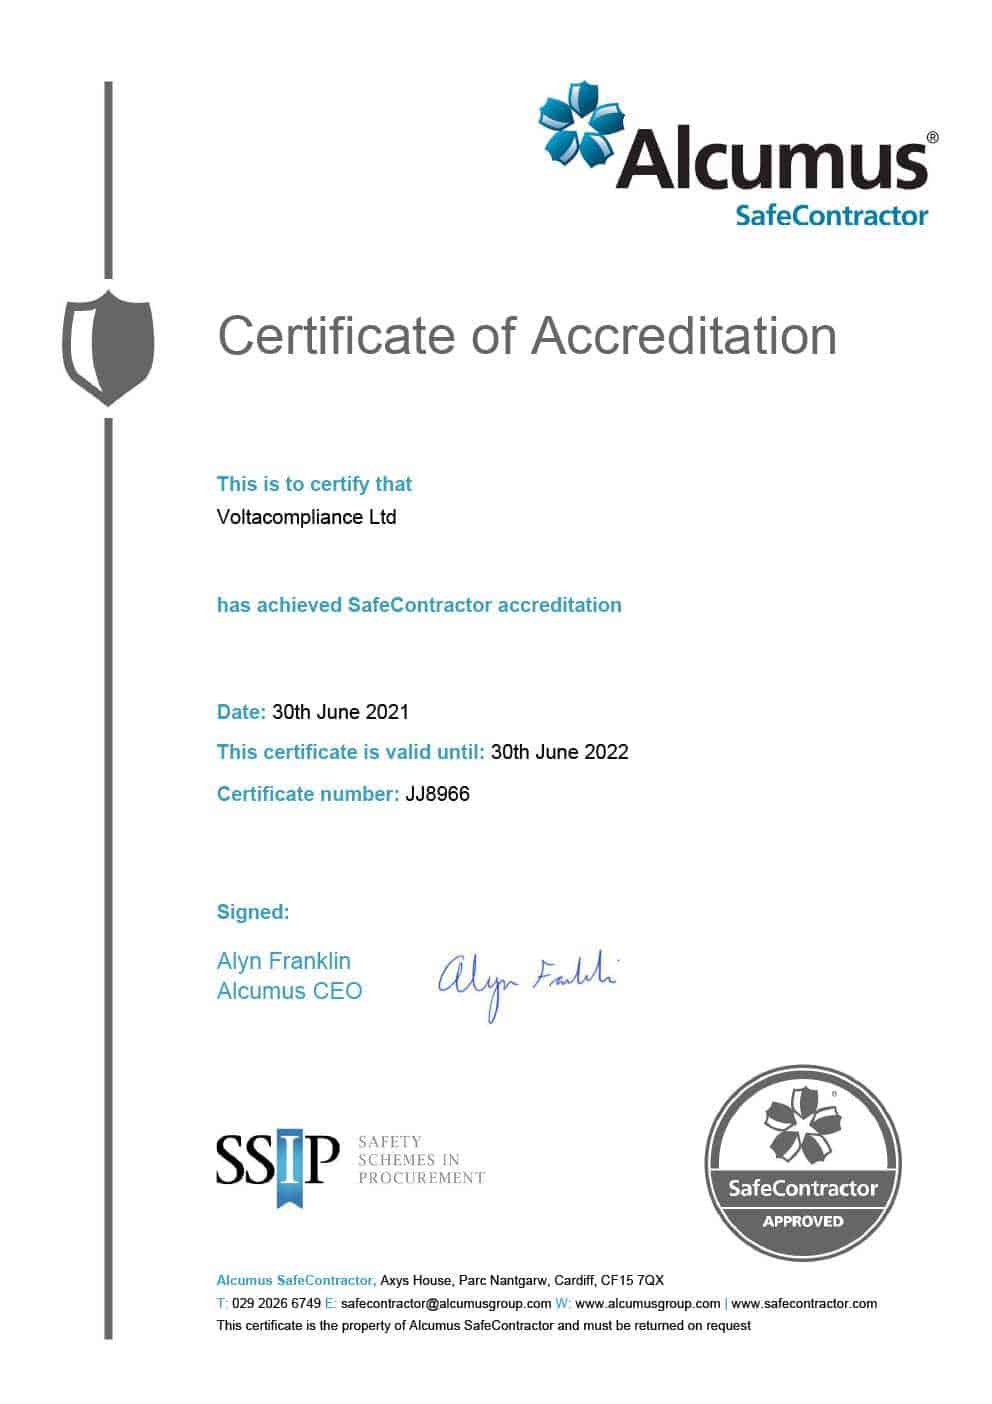 volta compliance has achieved safecontractor accreditation